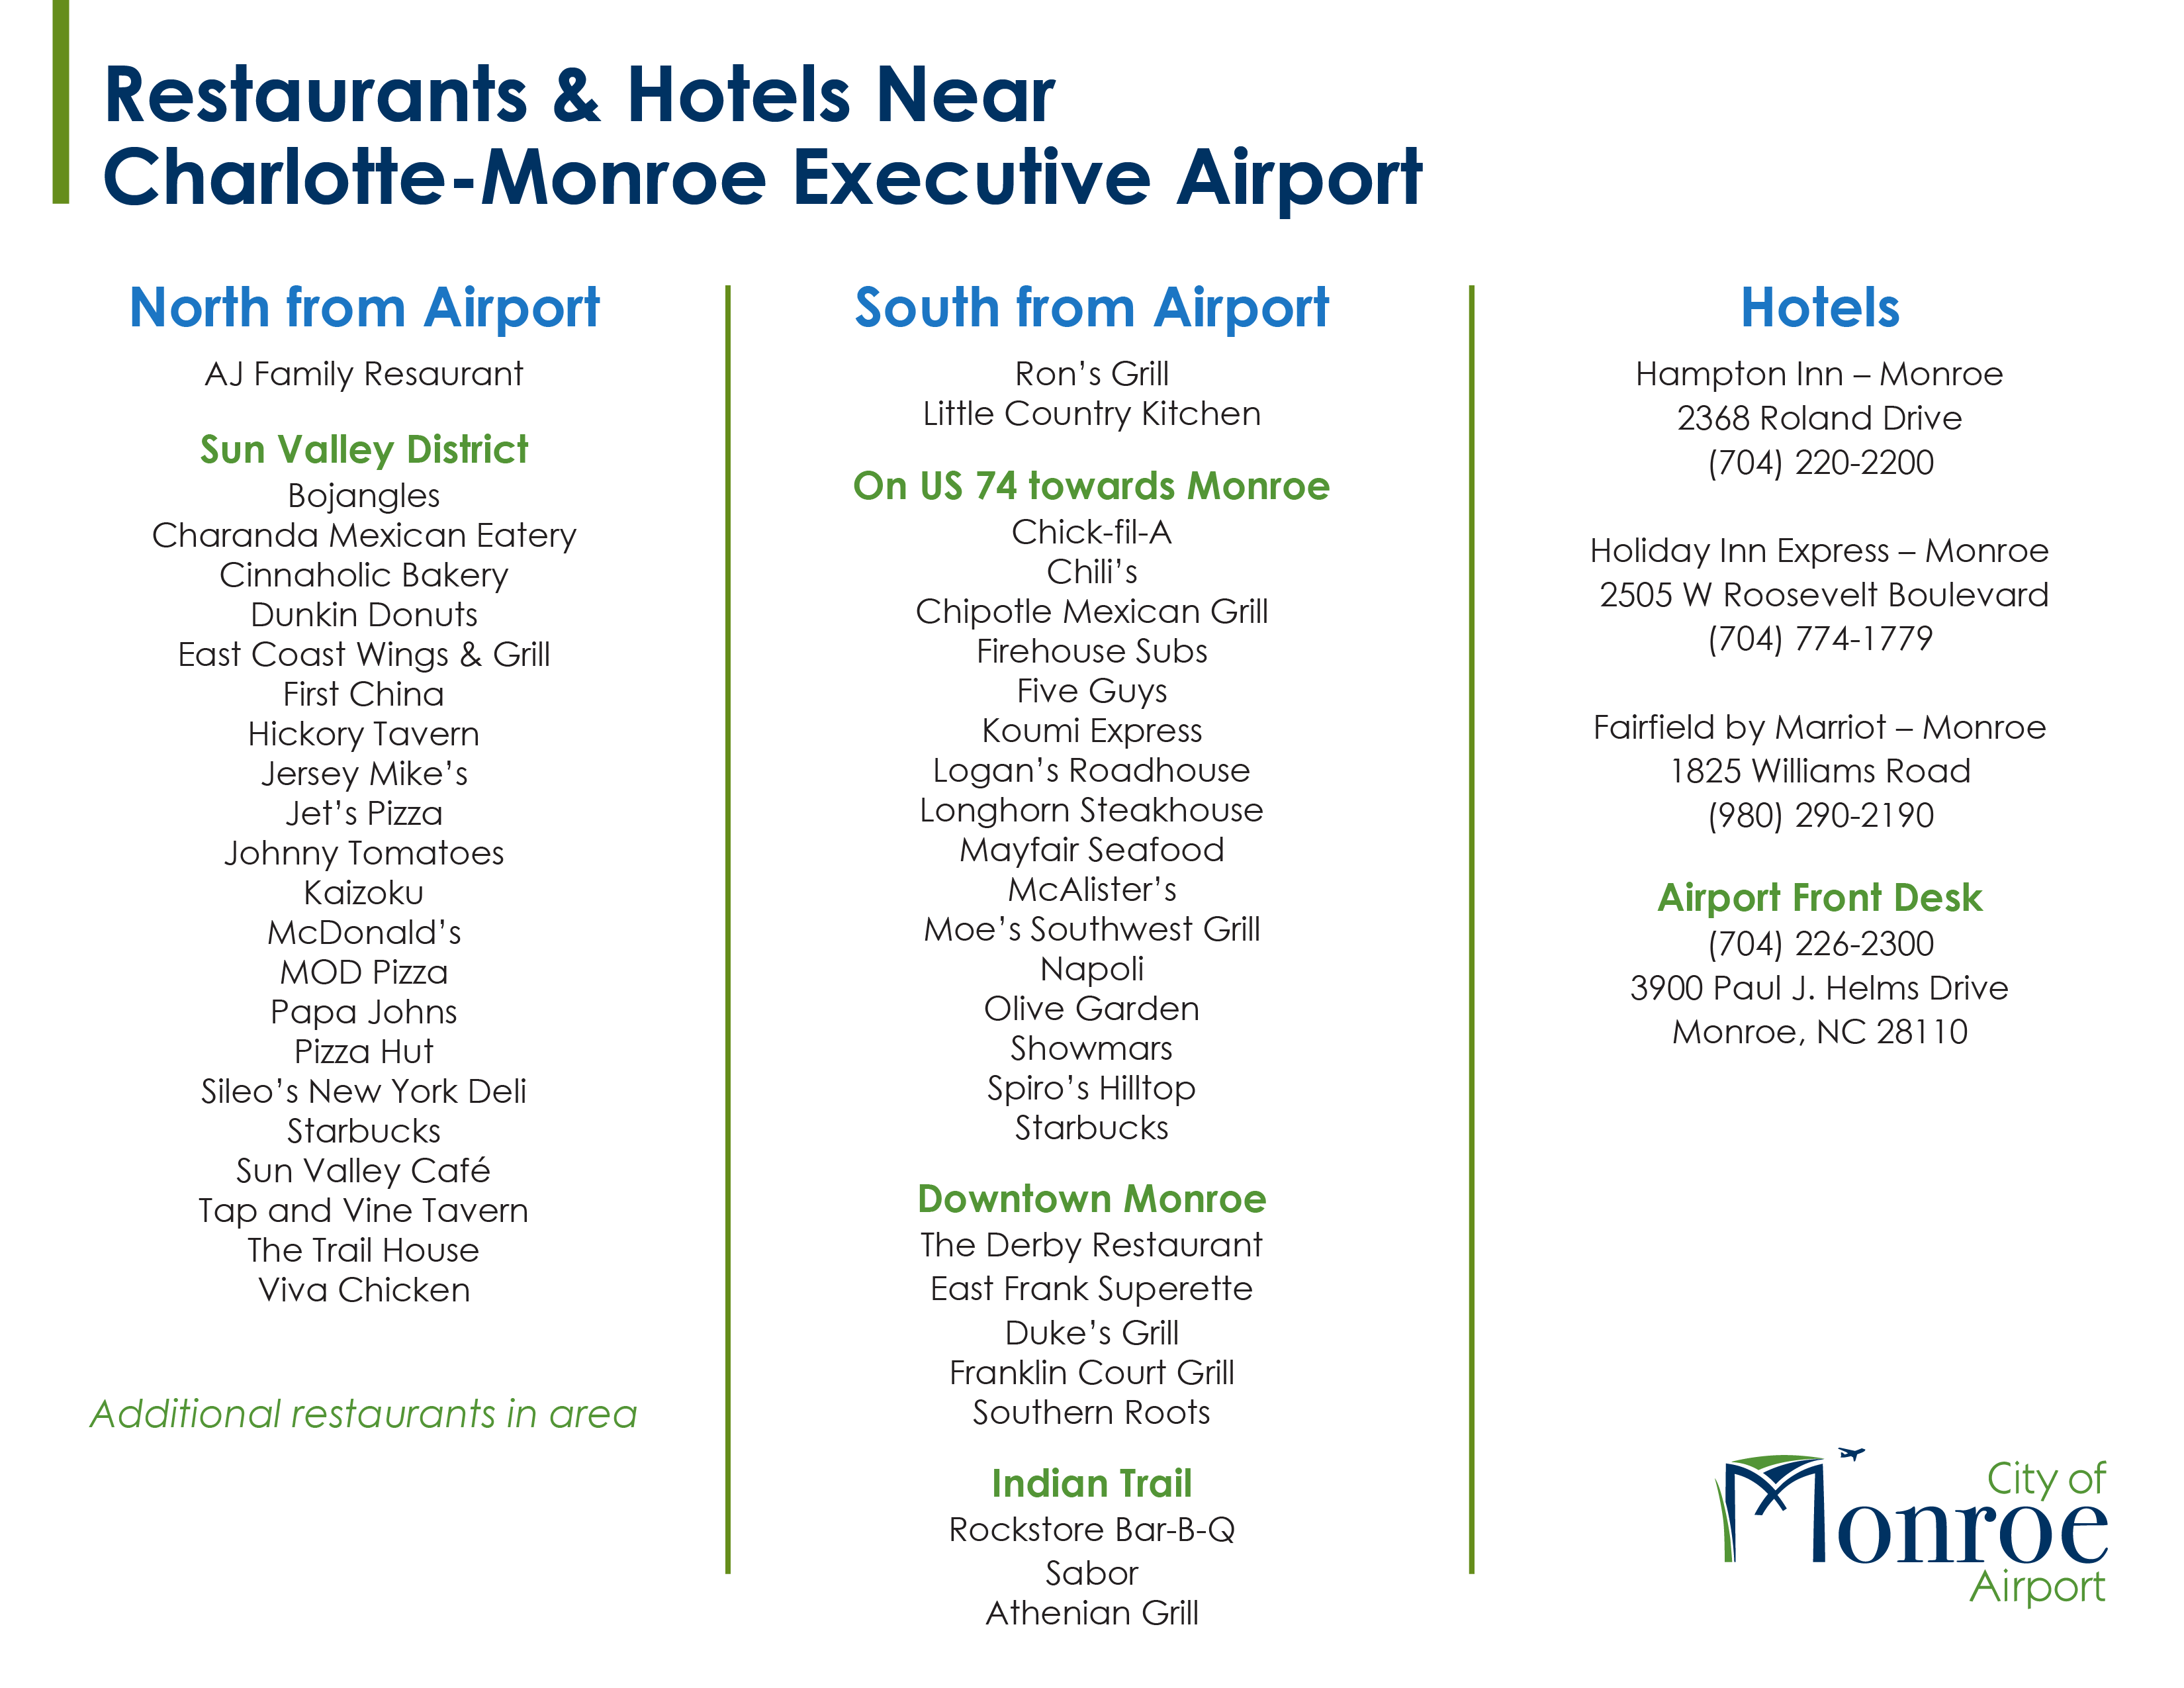 Restaurants & Hotels Near Charlotte-Monroe Executive Airport